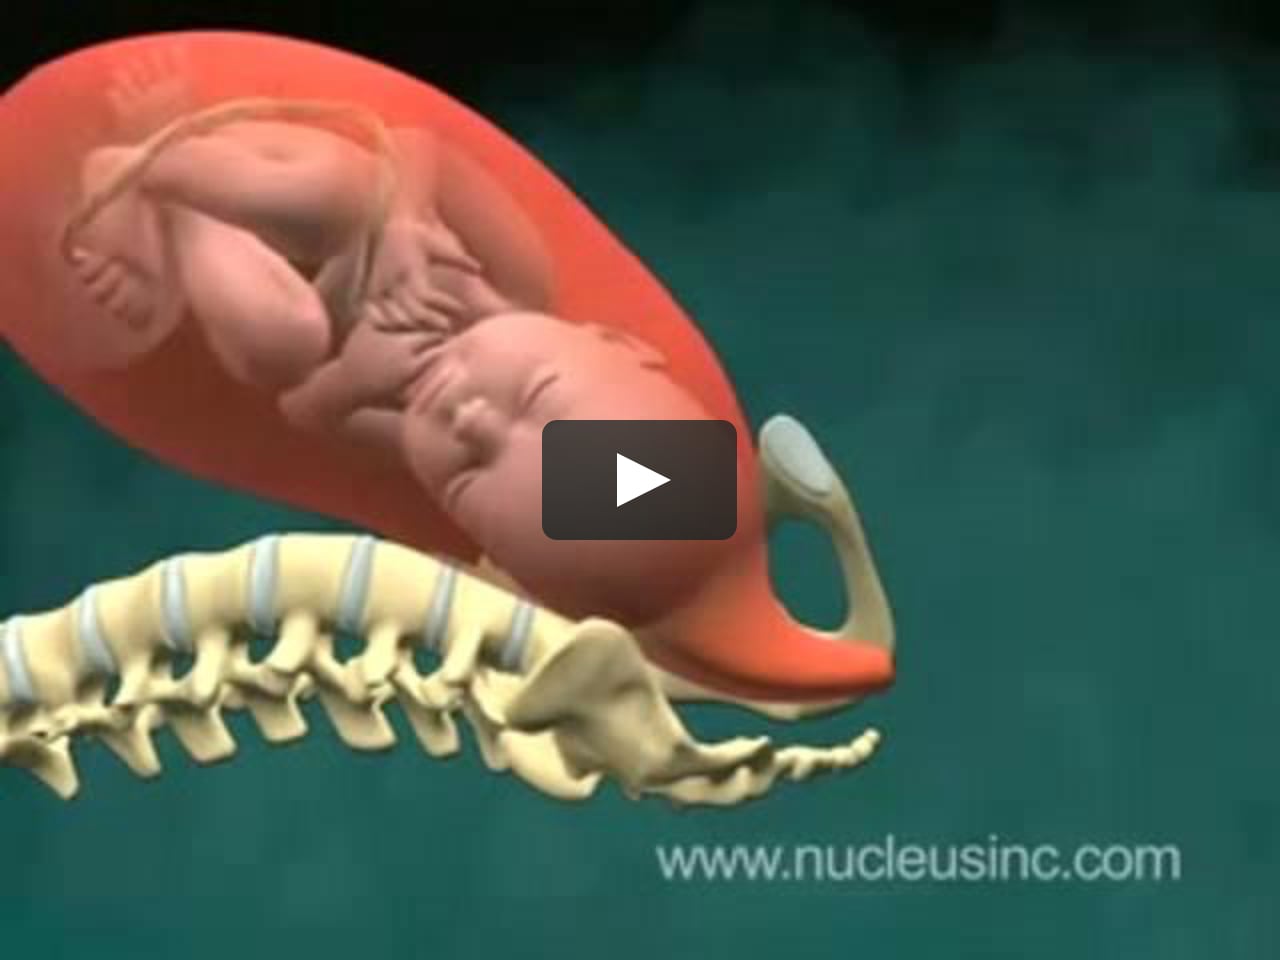 3D Medical Animation Birth of Baby (Vaginal Childbirth) on Vimeo